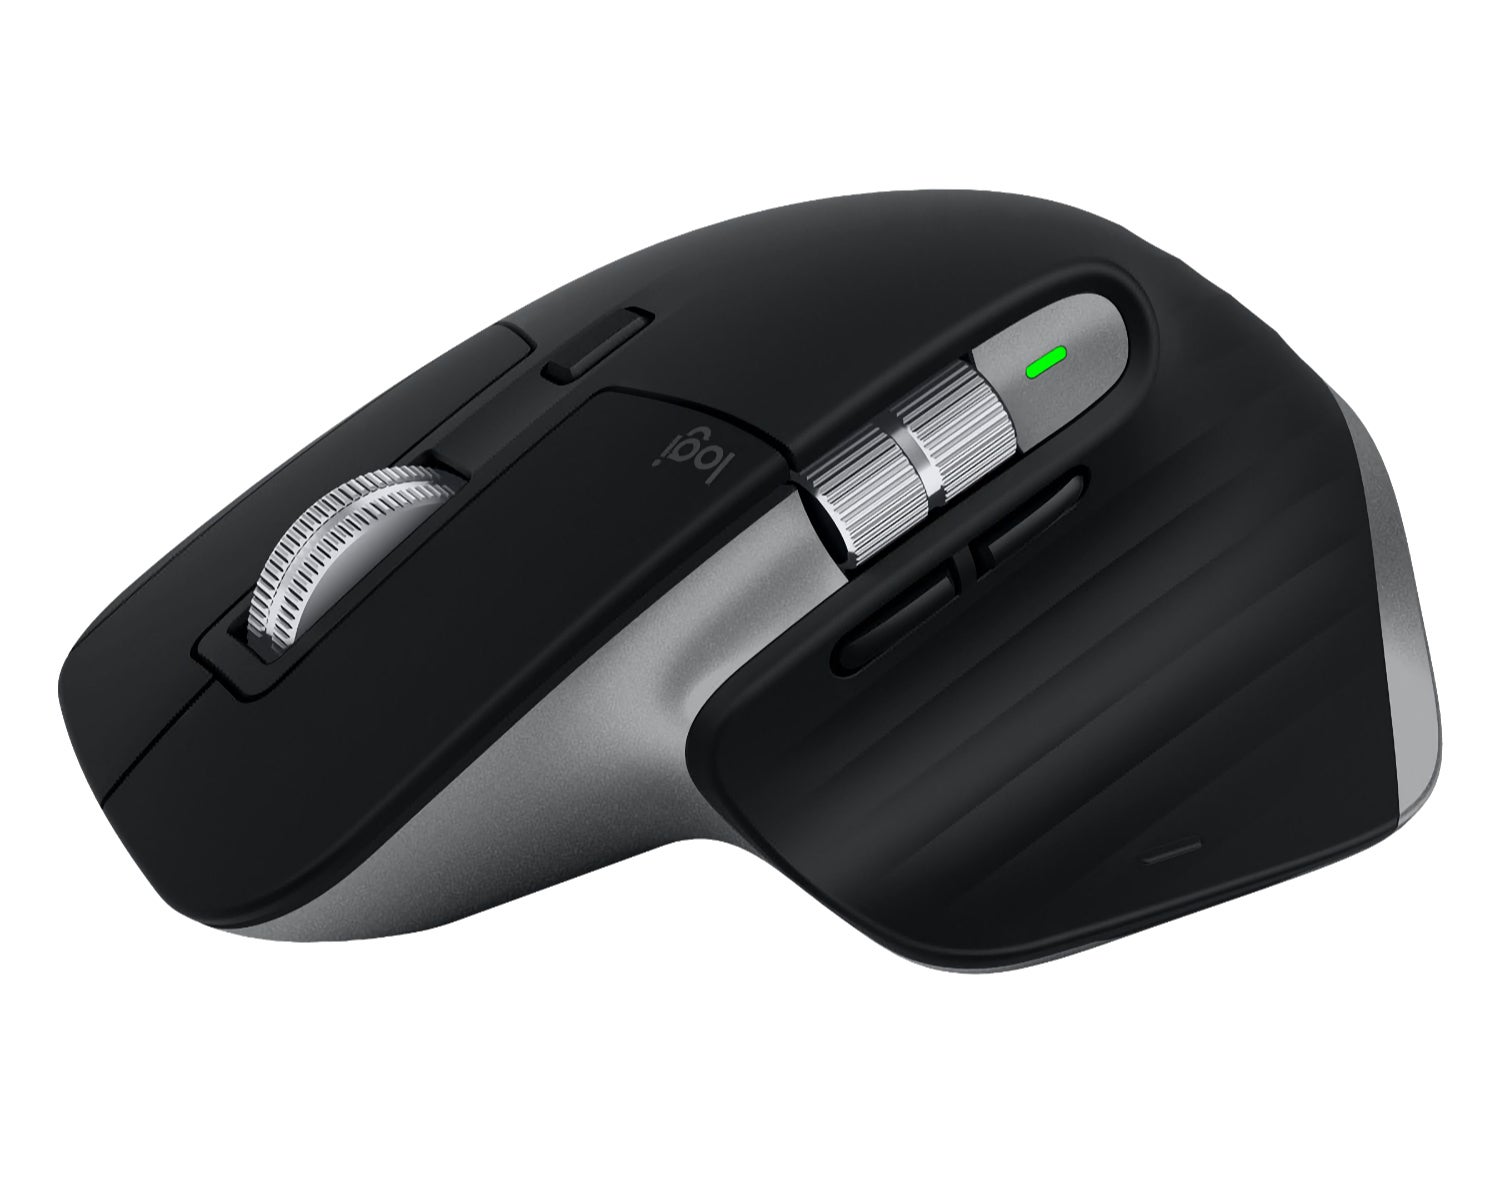 Logitech MX Master 3 mouse review | Macworld